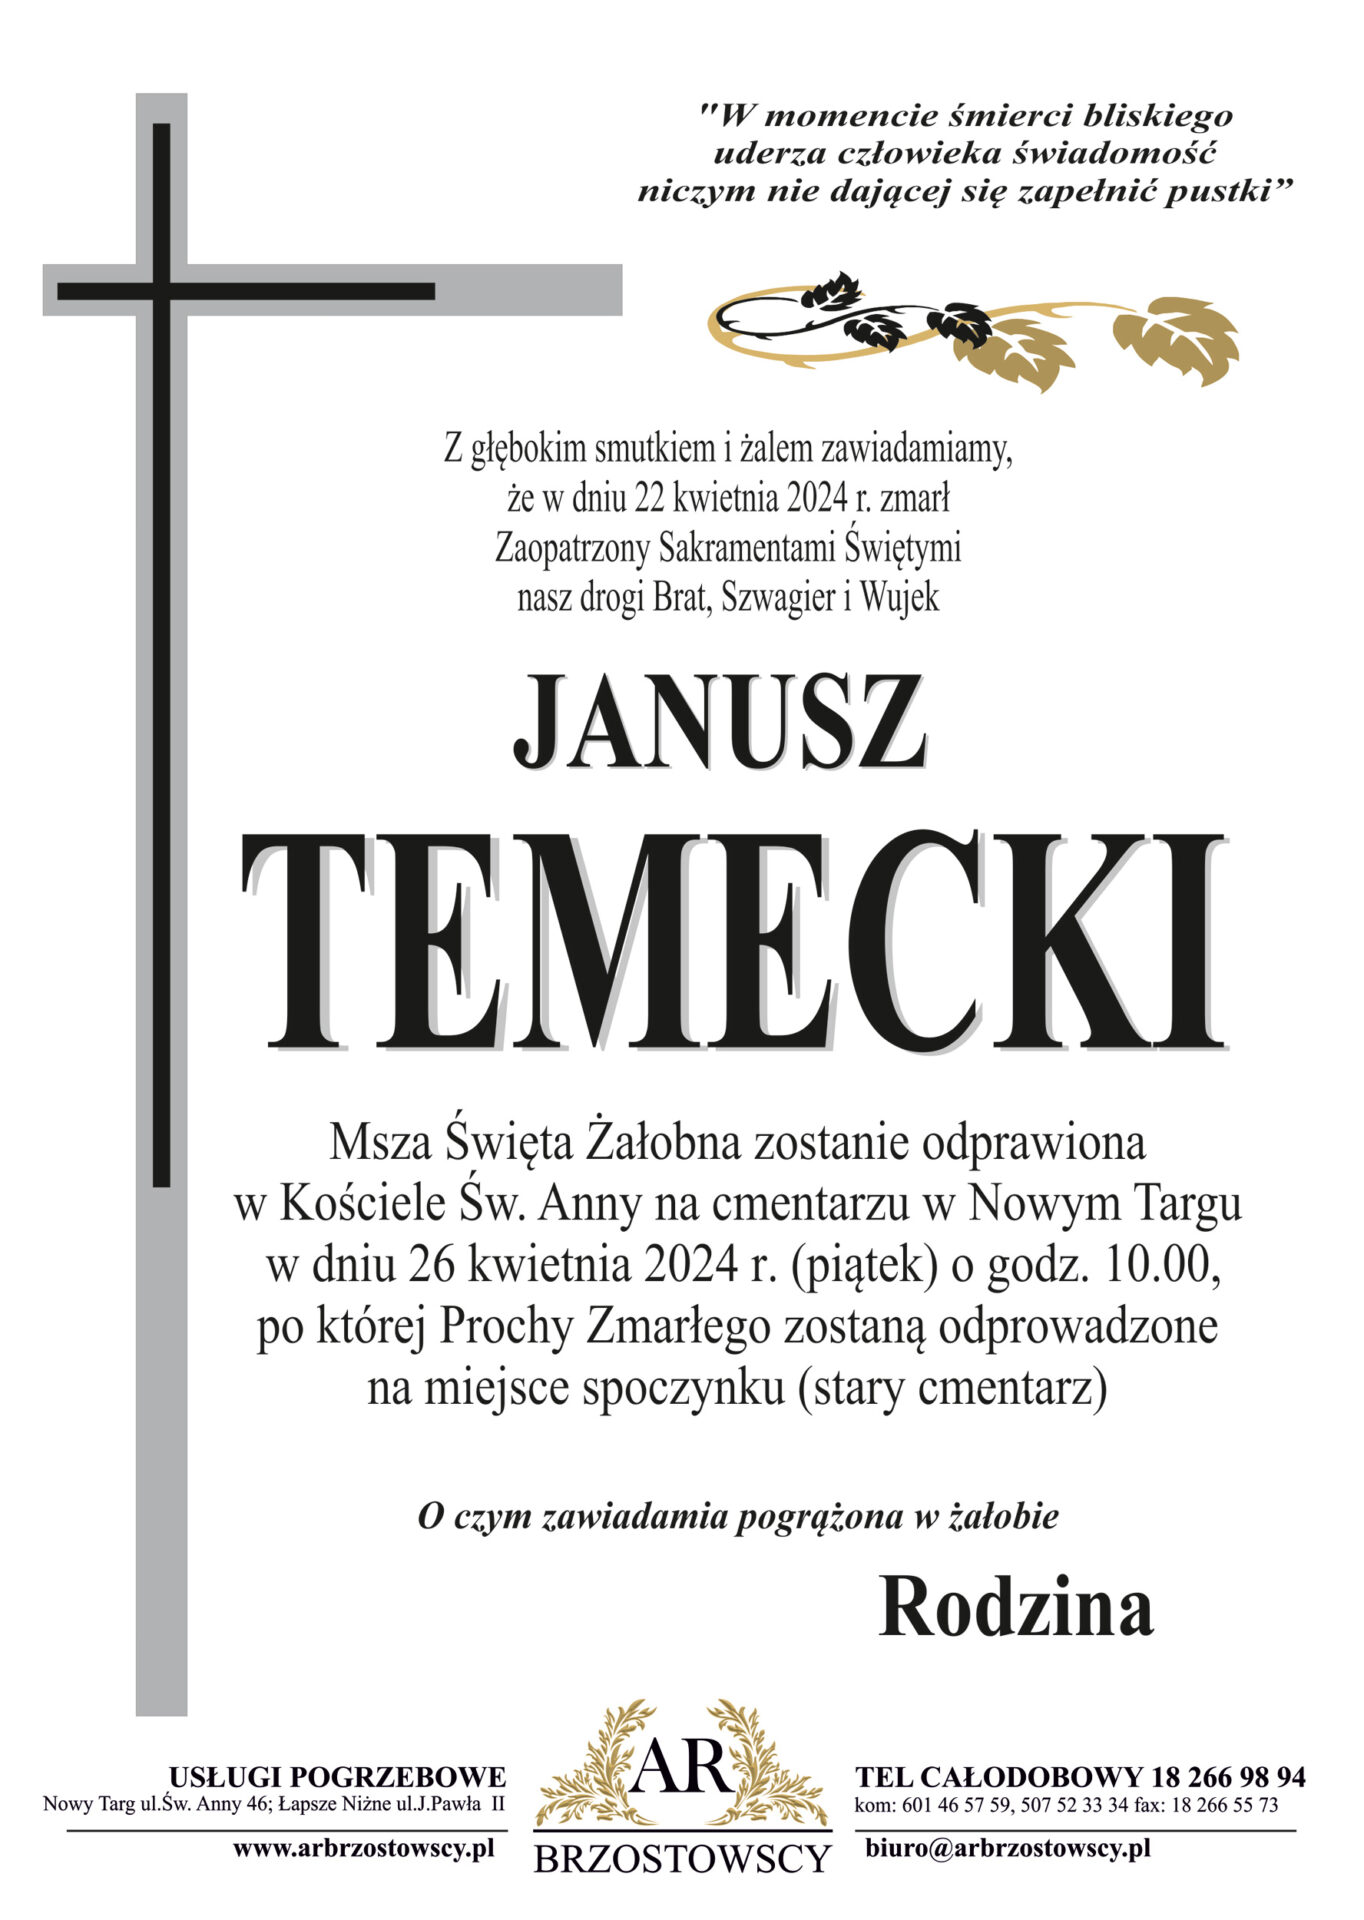 Janusz Temecki